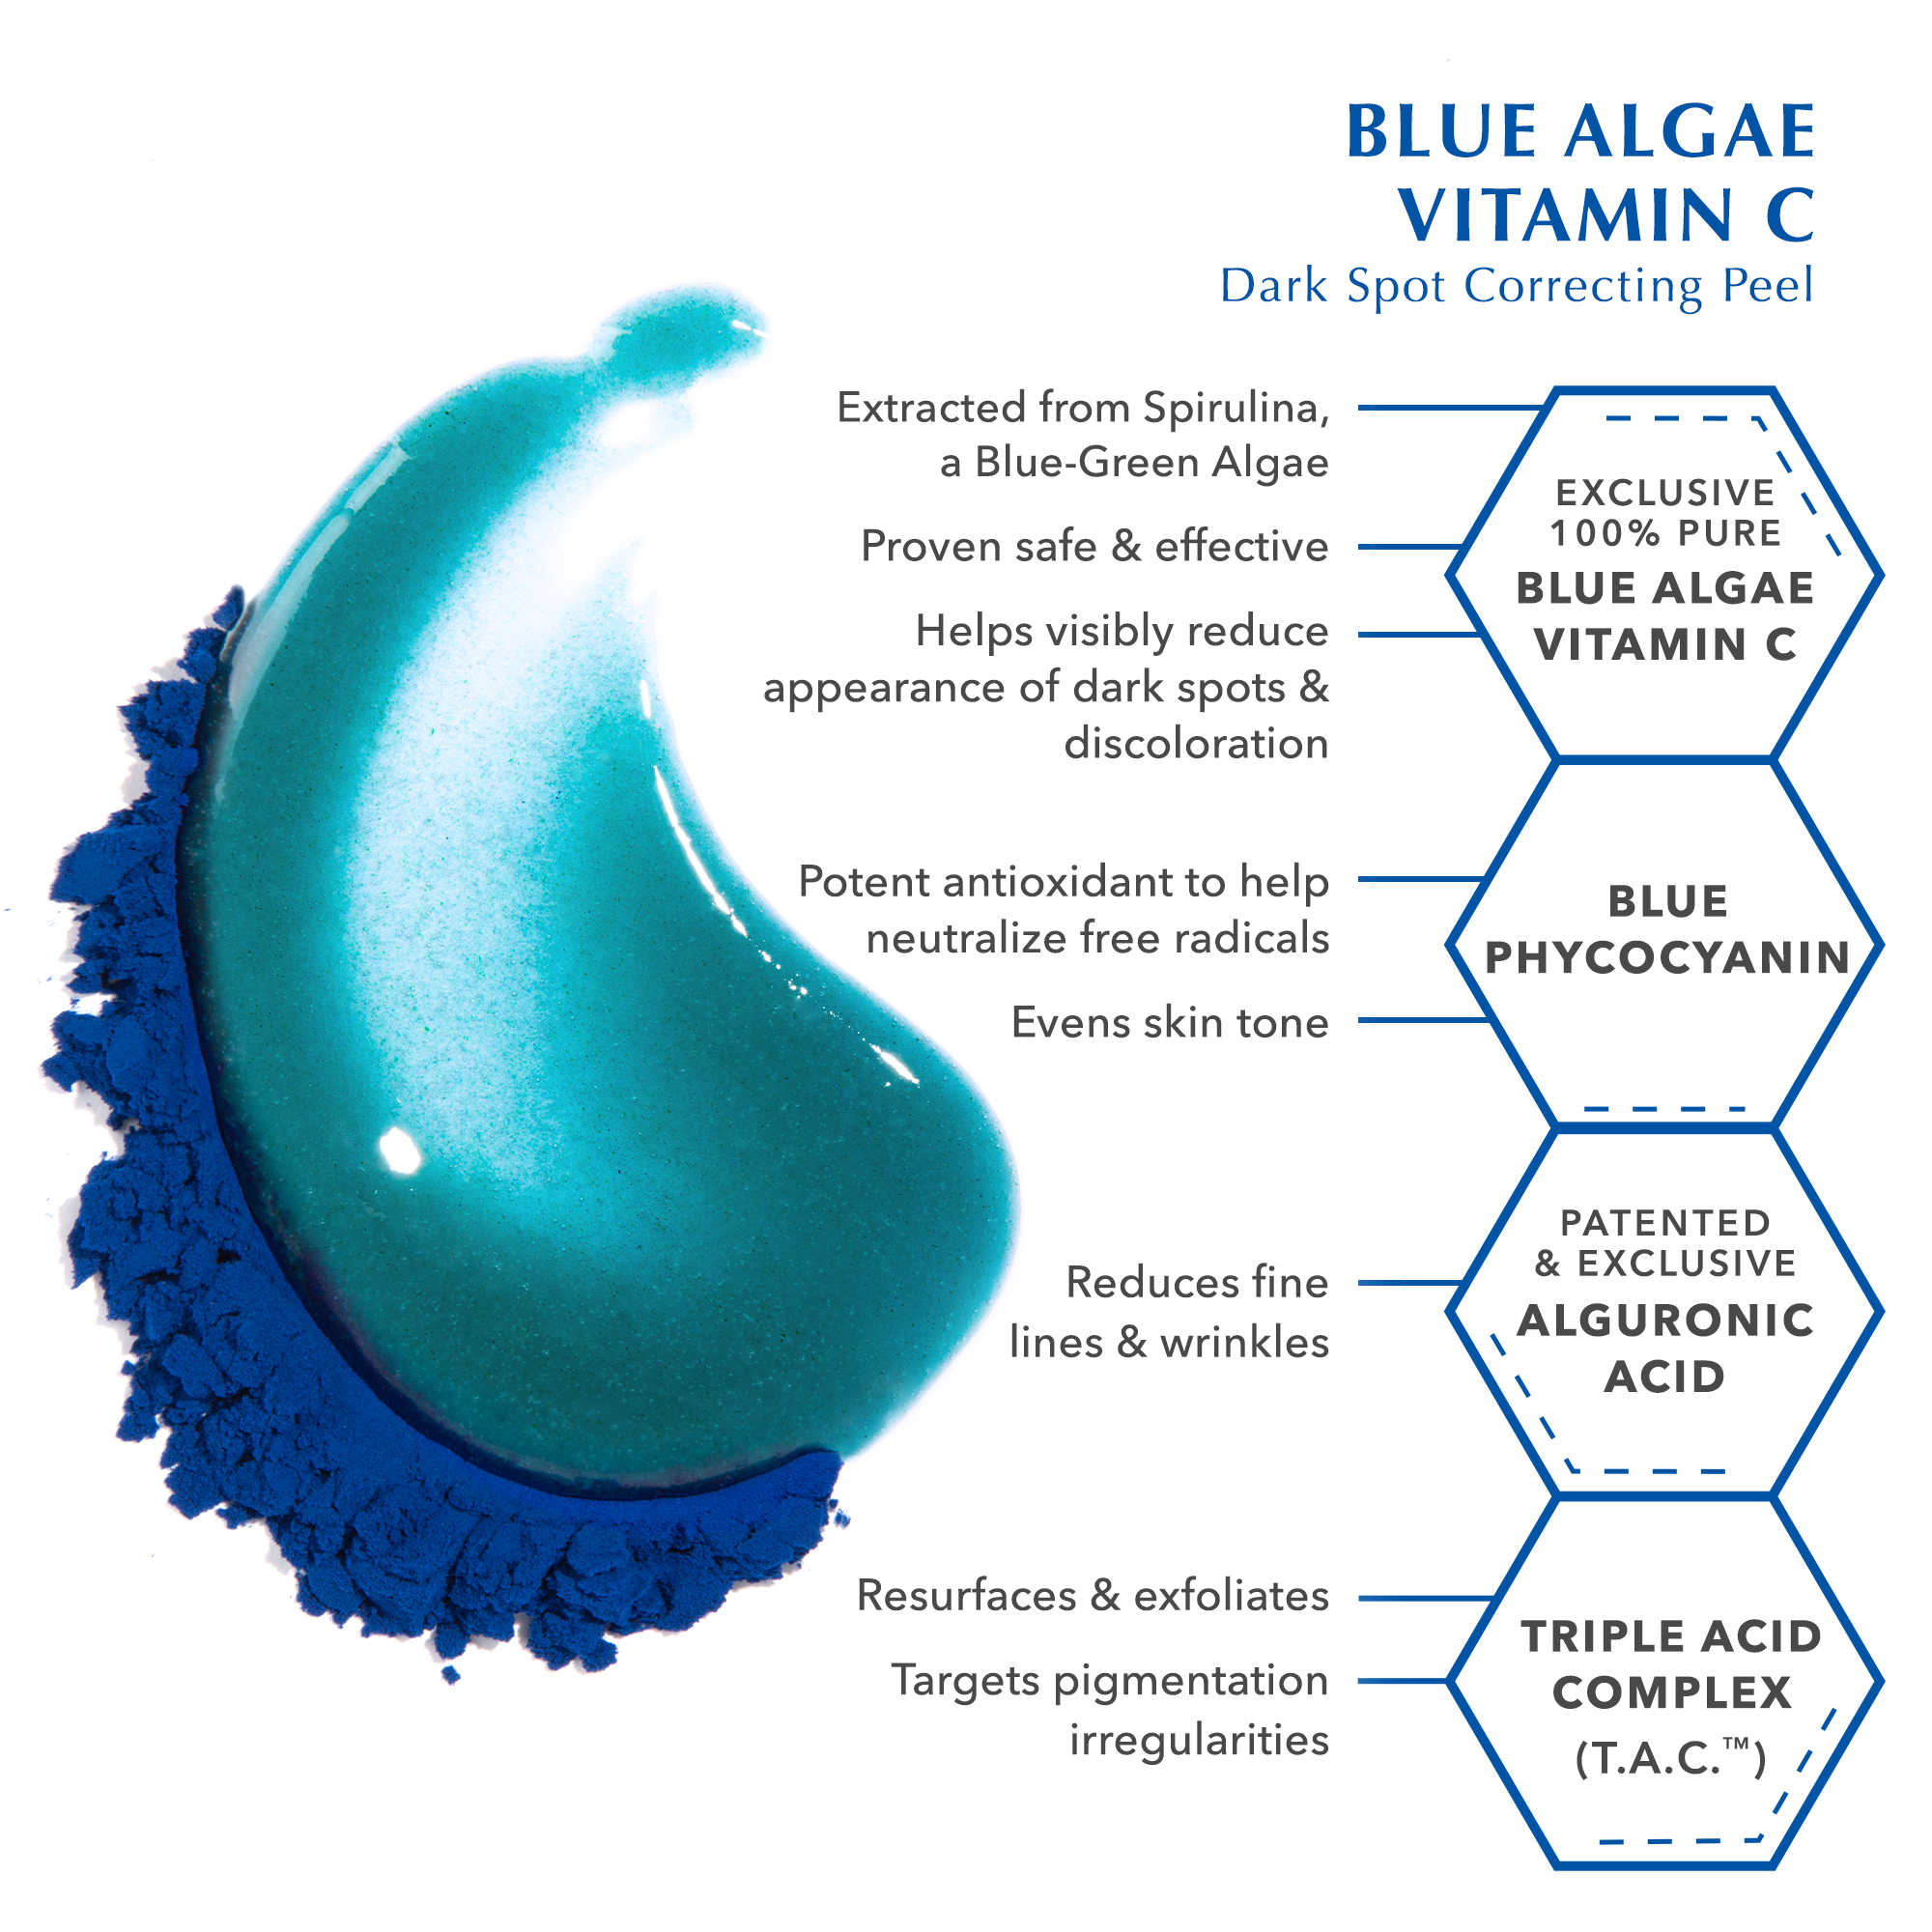 Blue Algae Vitamin C Dark Spot Correcting Peel Algenist